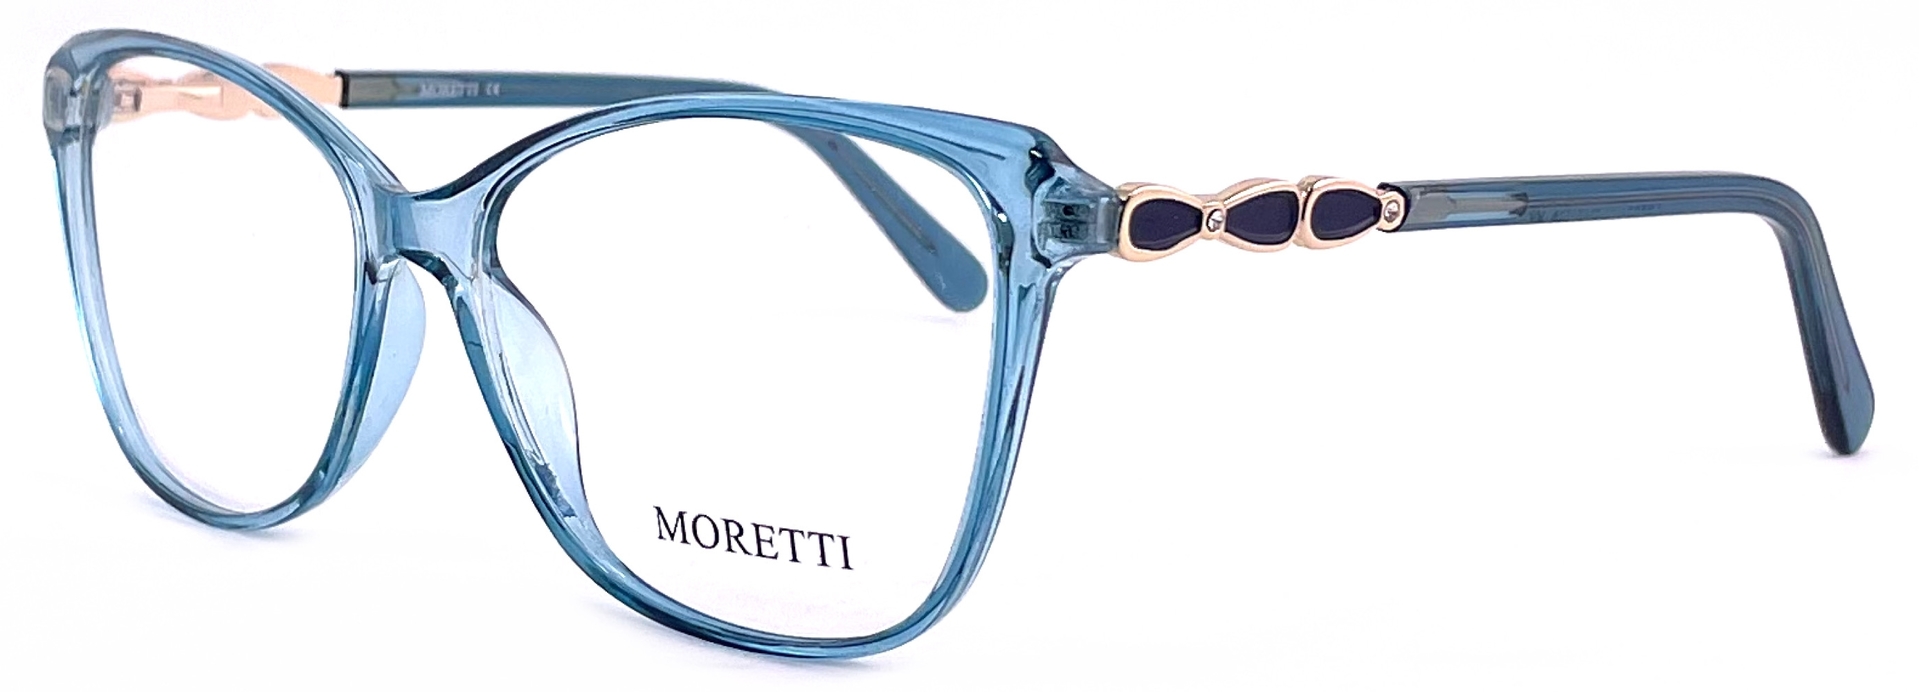 Moretti FL3201 C6 2